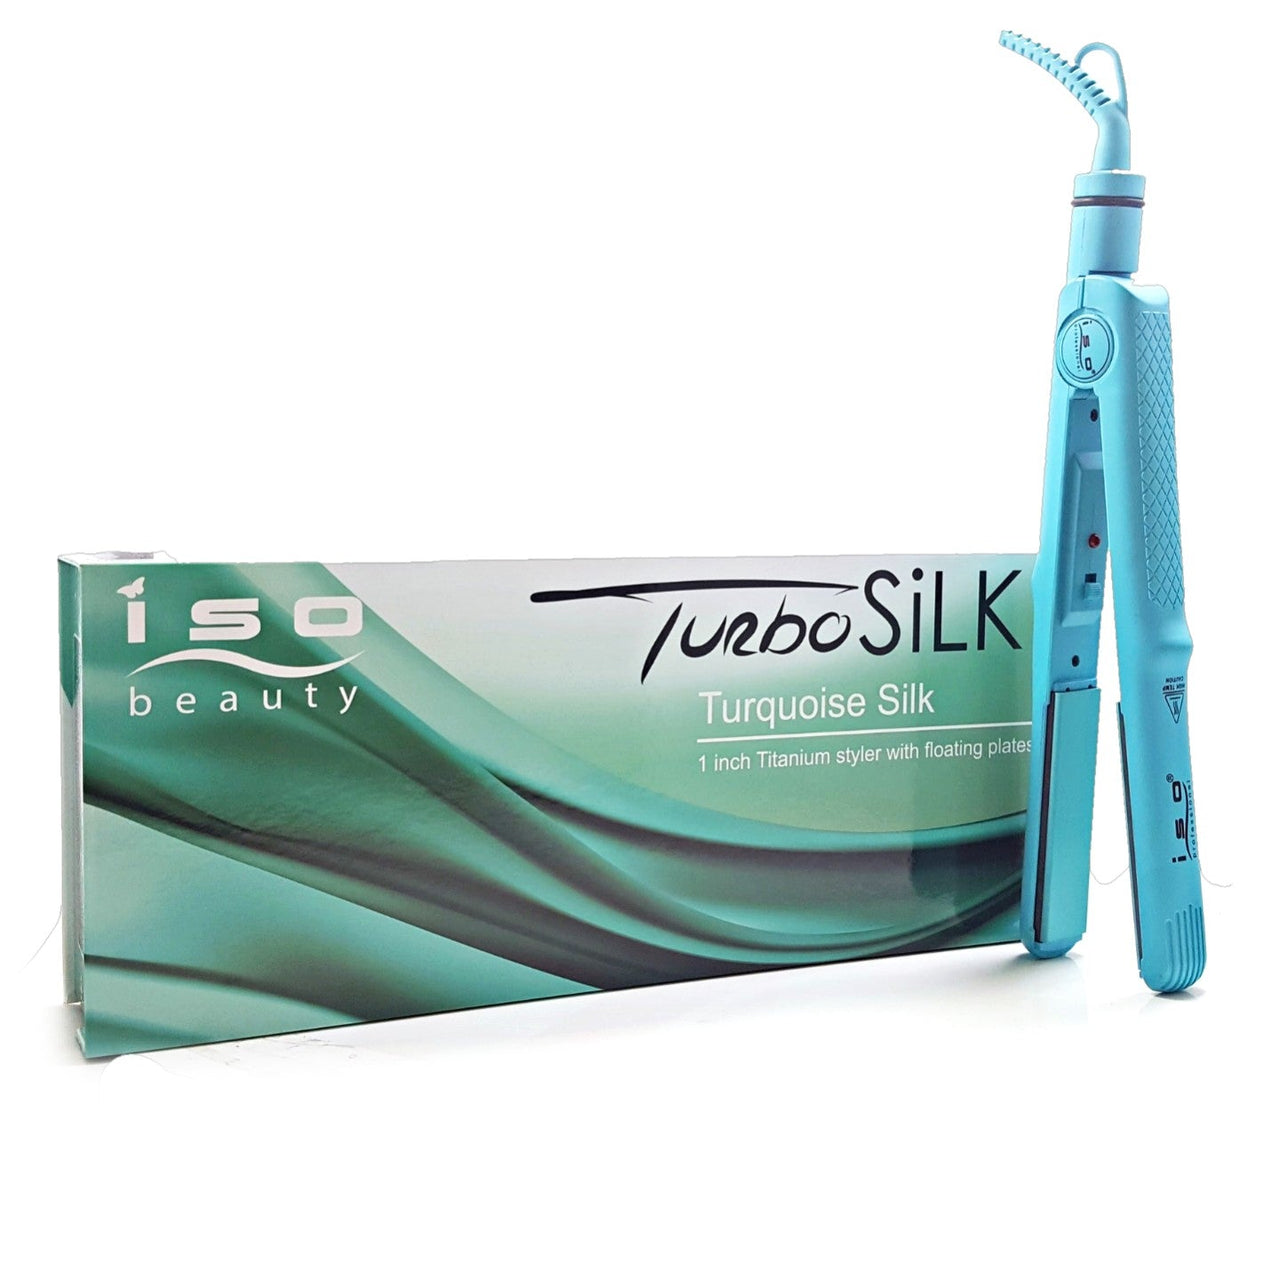 Turbo Silk 1.25" Tourmalin Ceramic Flat Iron Anti-Frizz Hair Straightener Turquoise